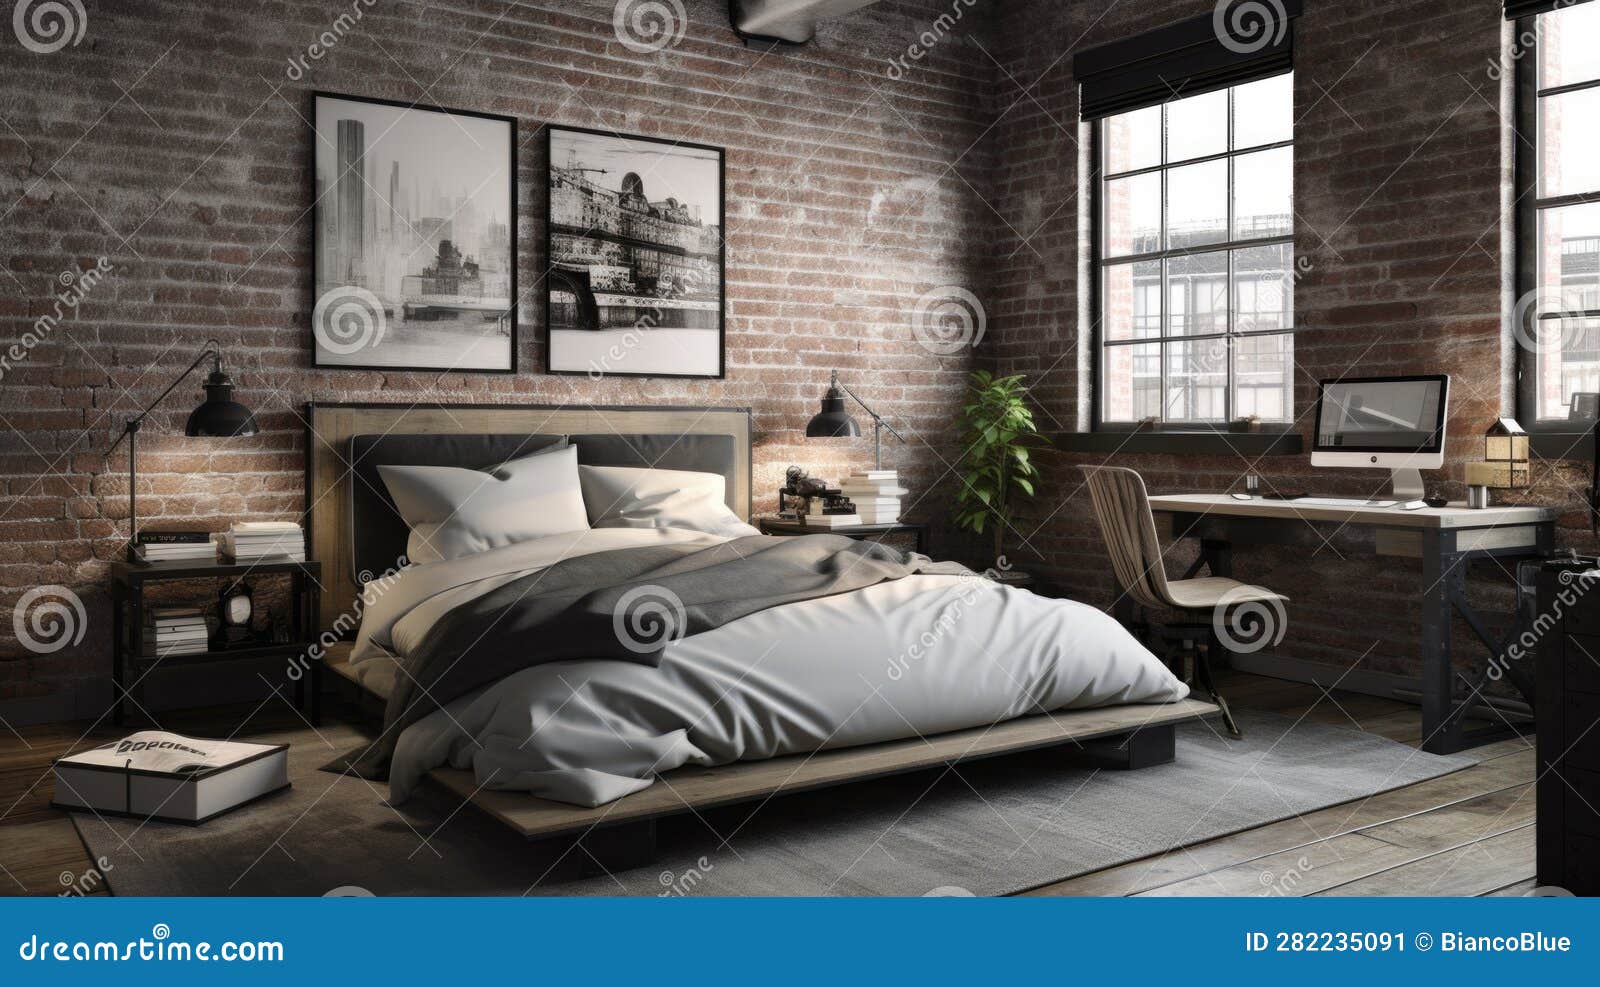 Bedroom Decor, Home Interior Design . Industrial Urban Style Stock ...